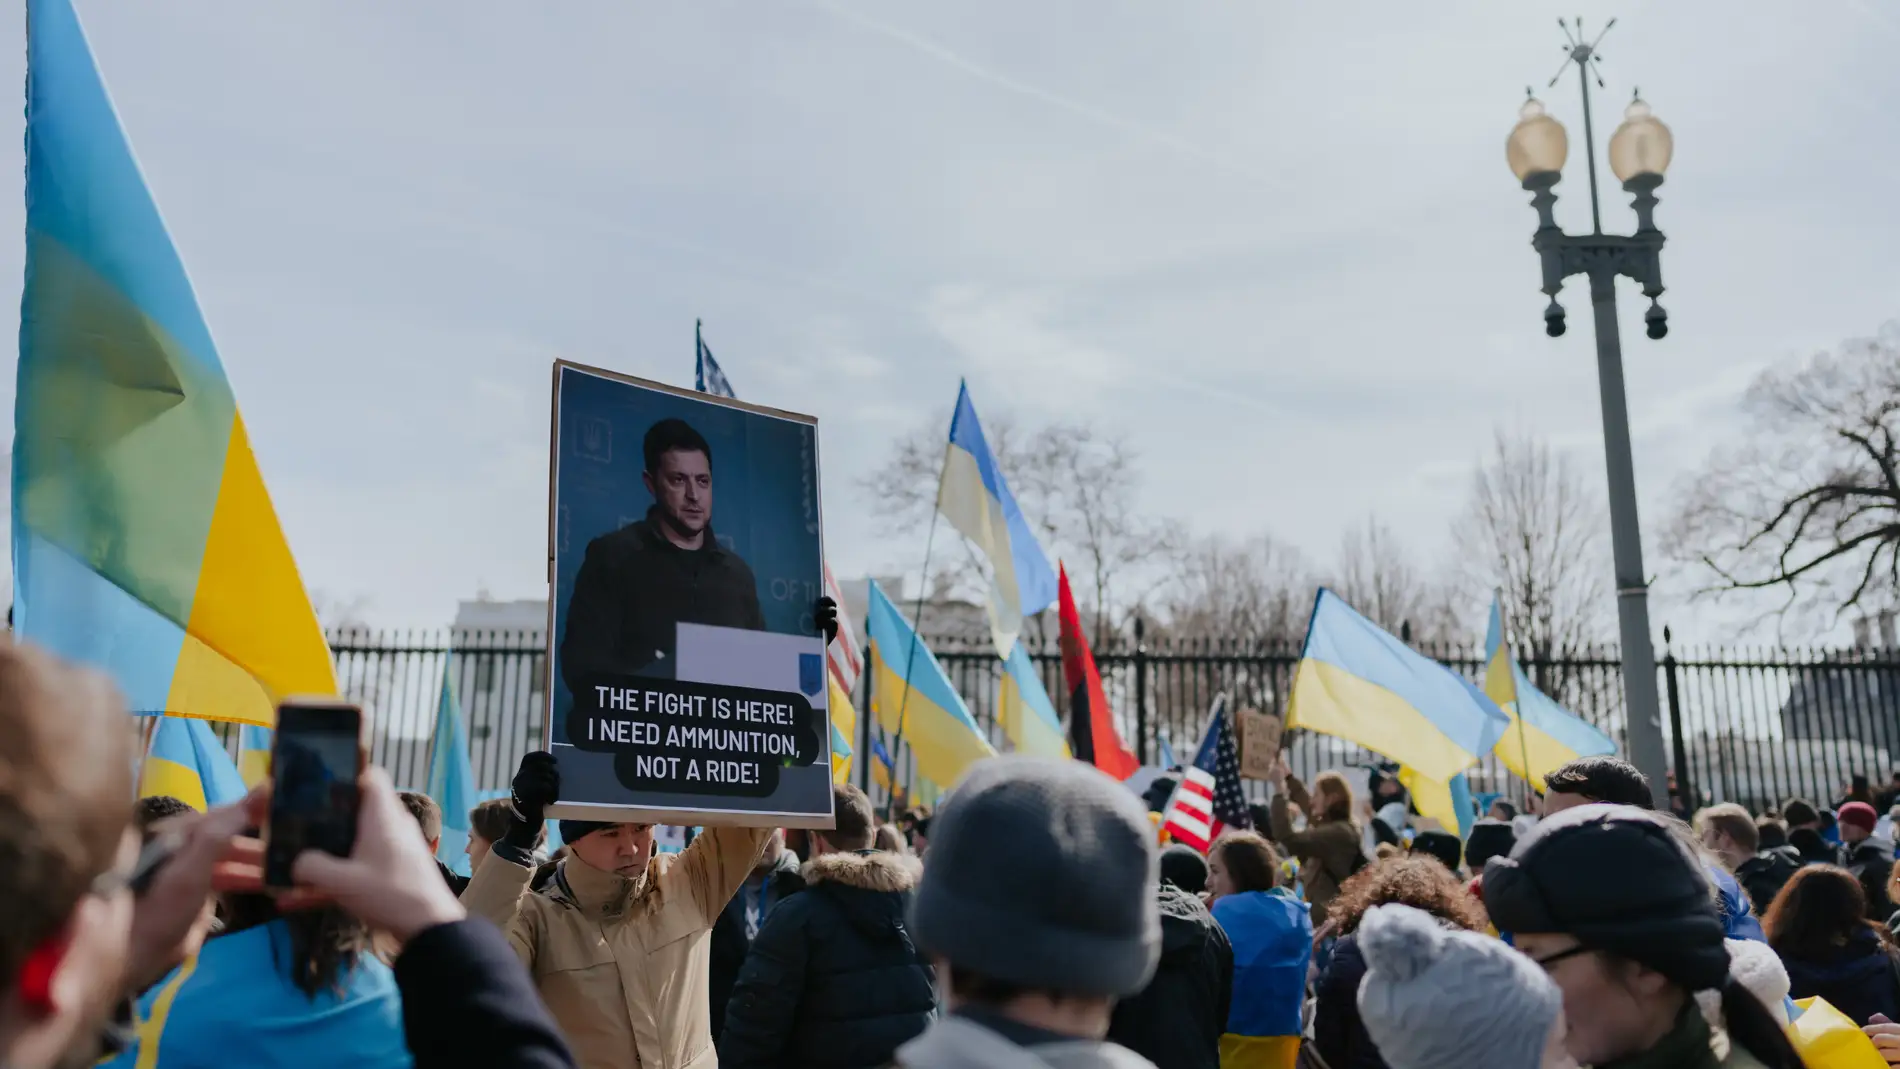 Manifestación en apoyo a Ucrania en Washington, EEUU, con cartel de Zelenski